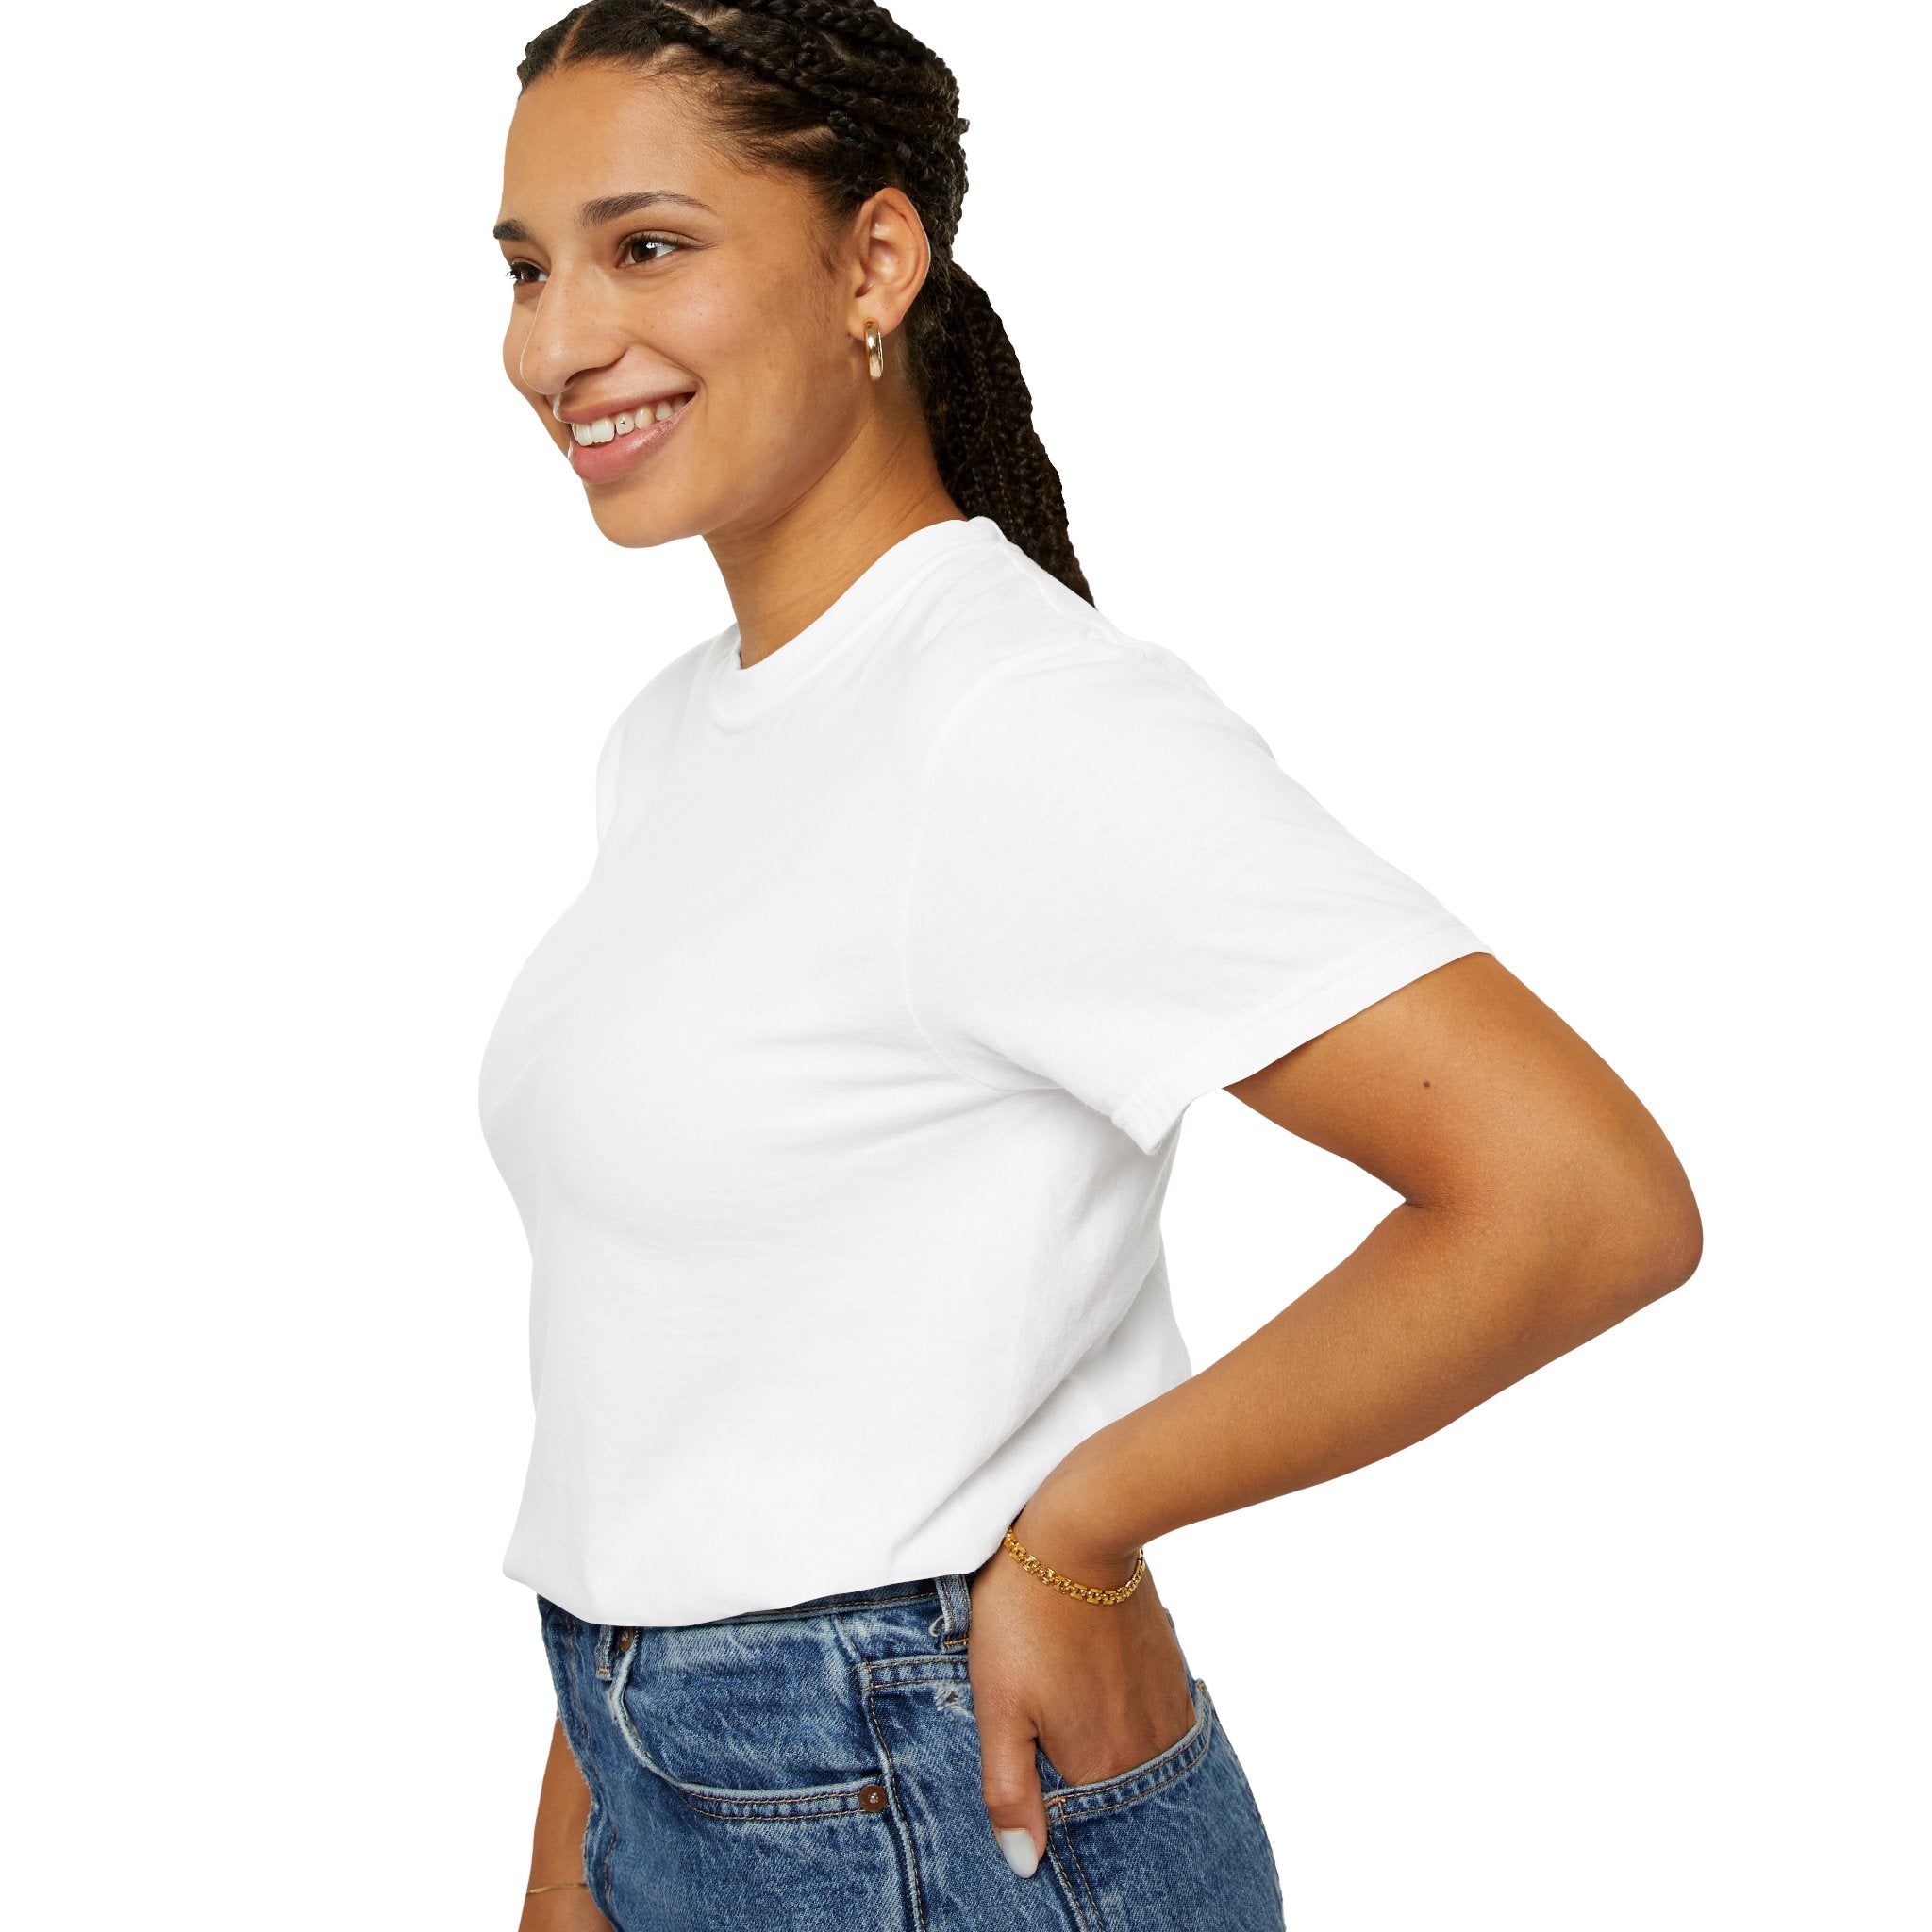 Gotcha Bug: 'Is There Something on My Back?' - Humorous Unisex Garment-Dyed T-Shirt